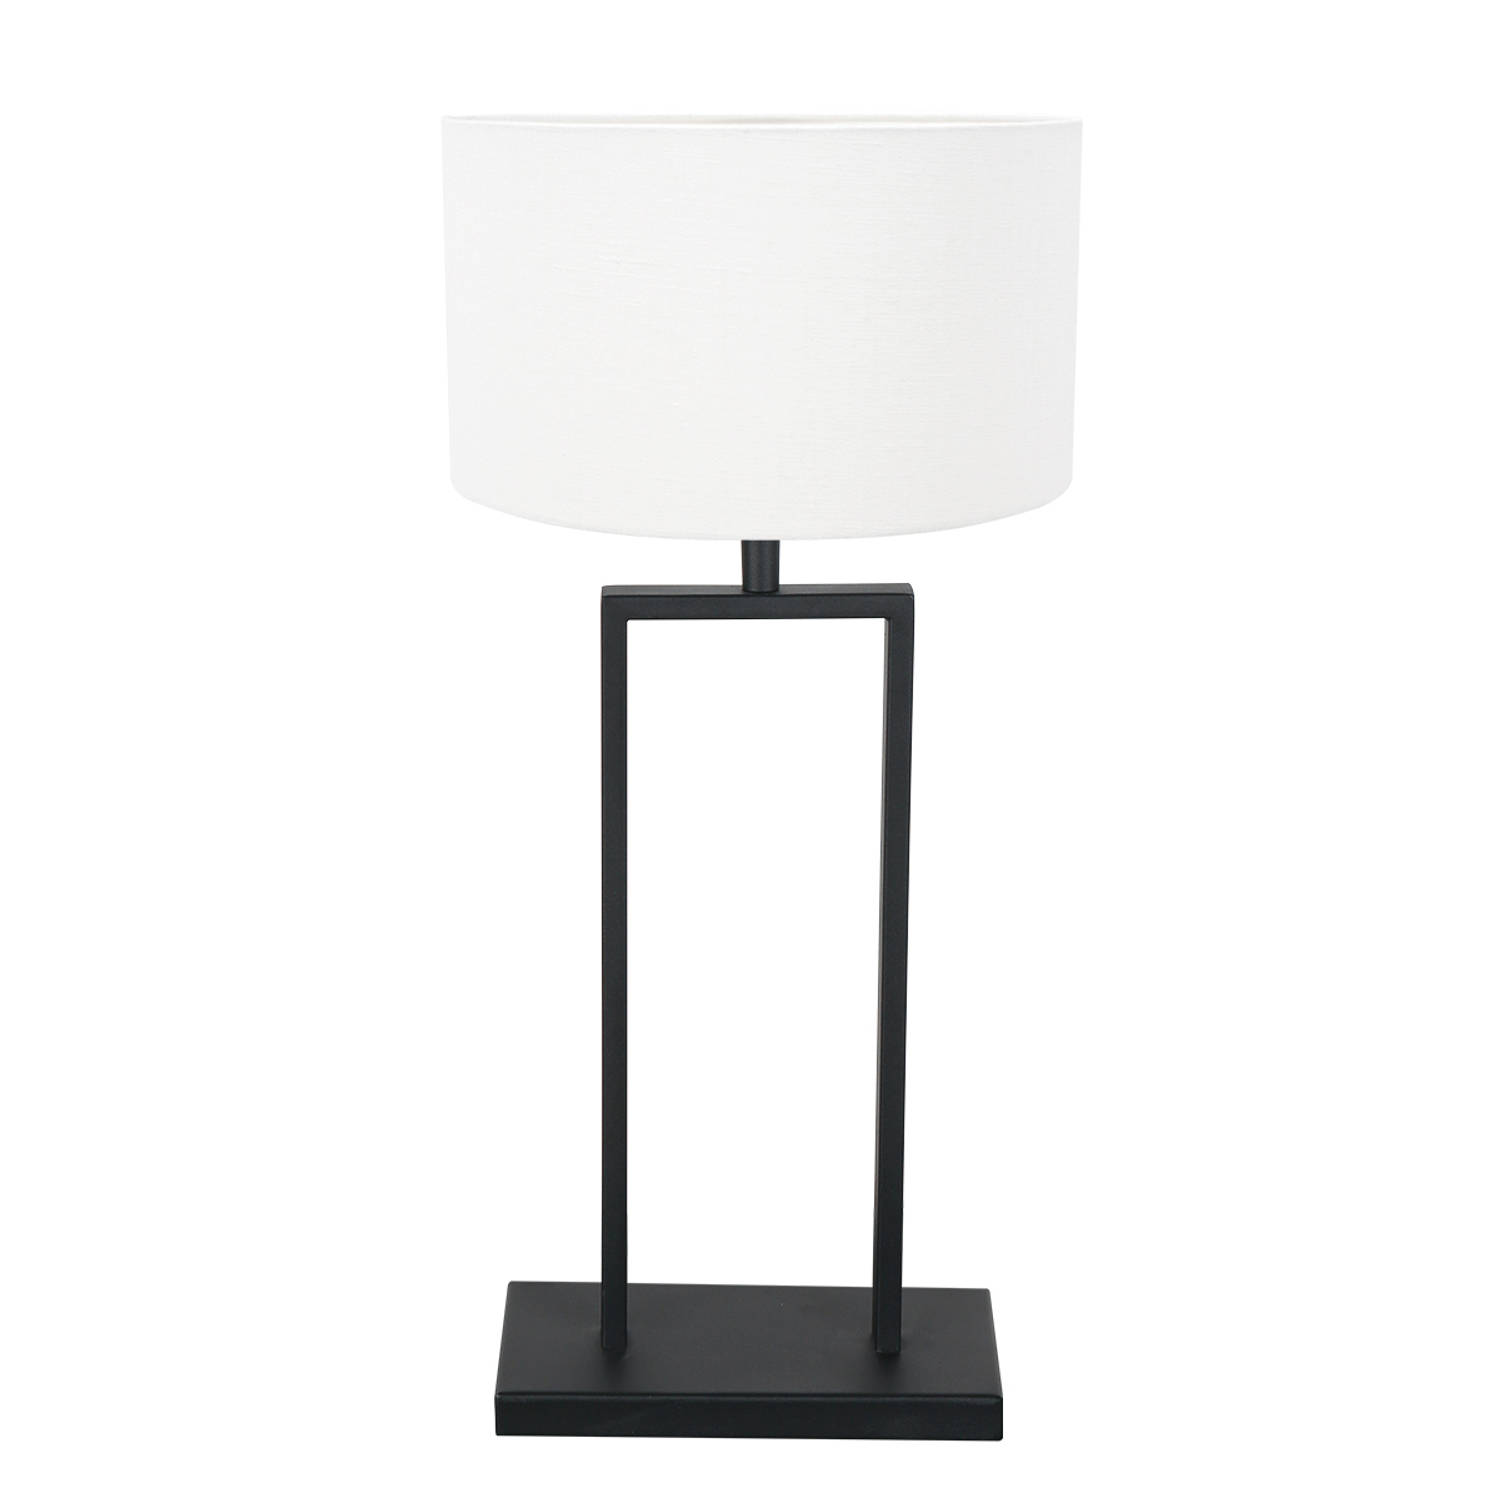 Tafellamp Stang | 1-lichts | wit / zwart | E27 grote fitting | modern design | woonkamer / slaapkamer